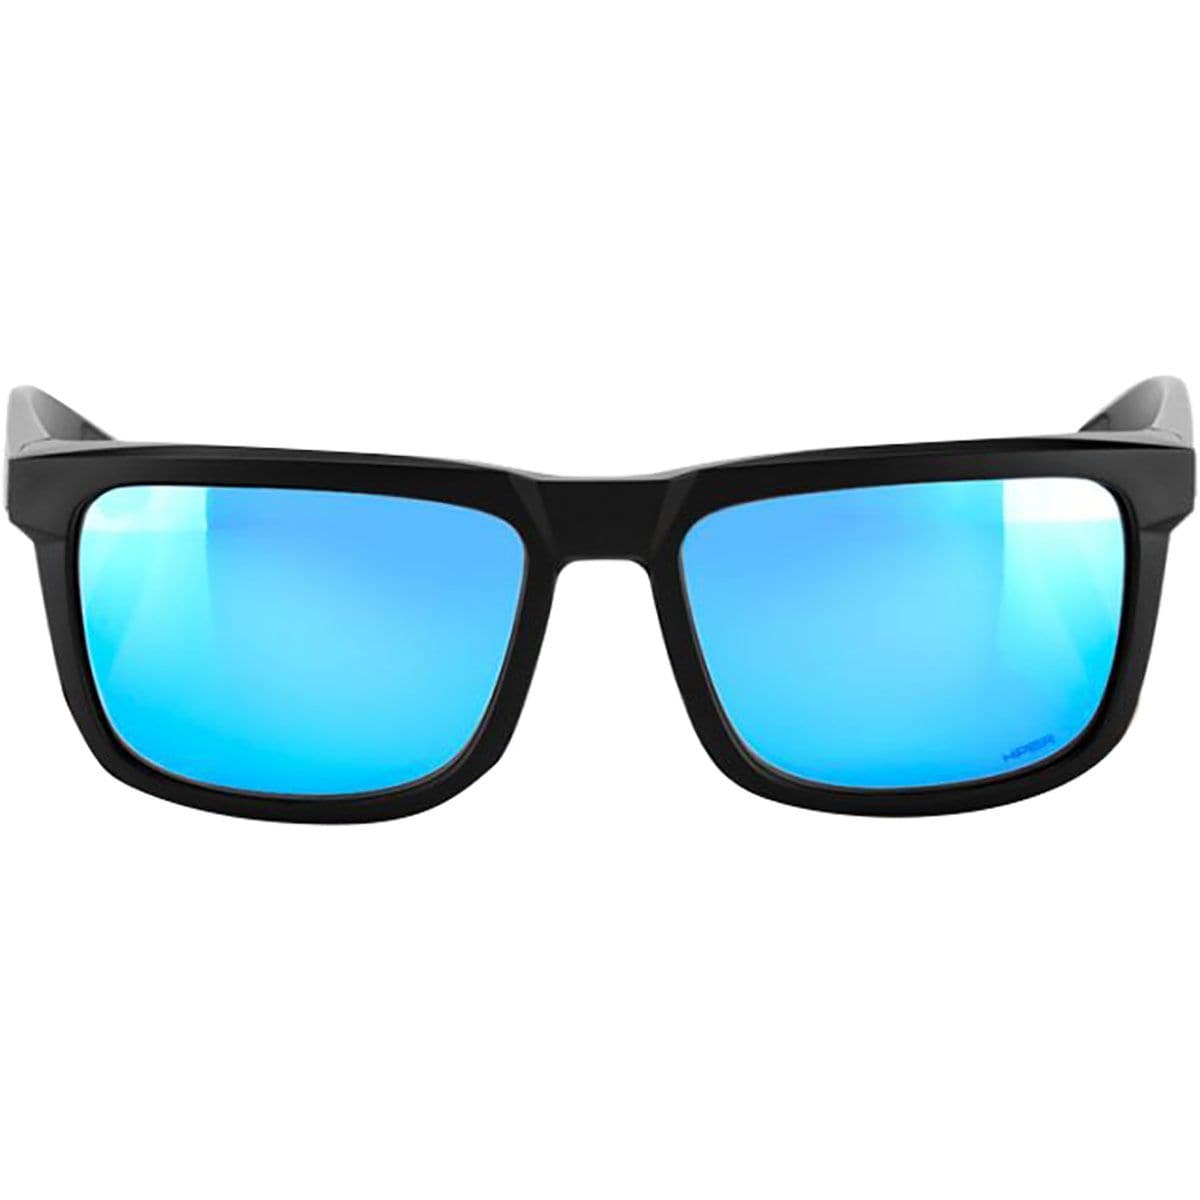  100% Blake Sunglasses - Accessories